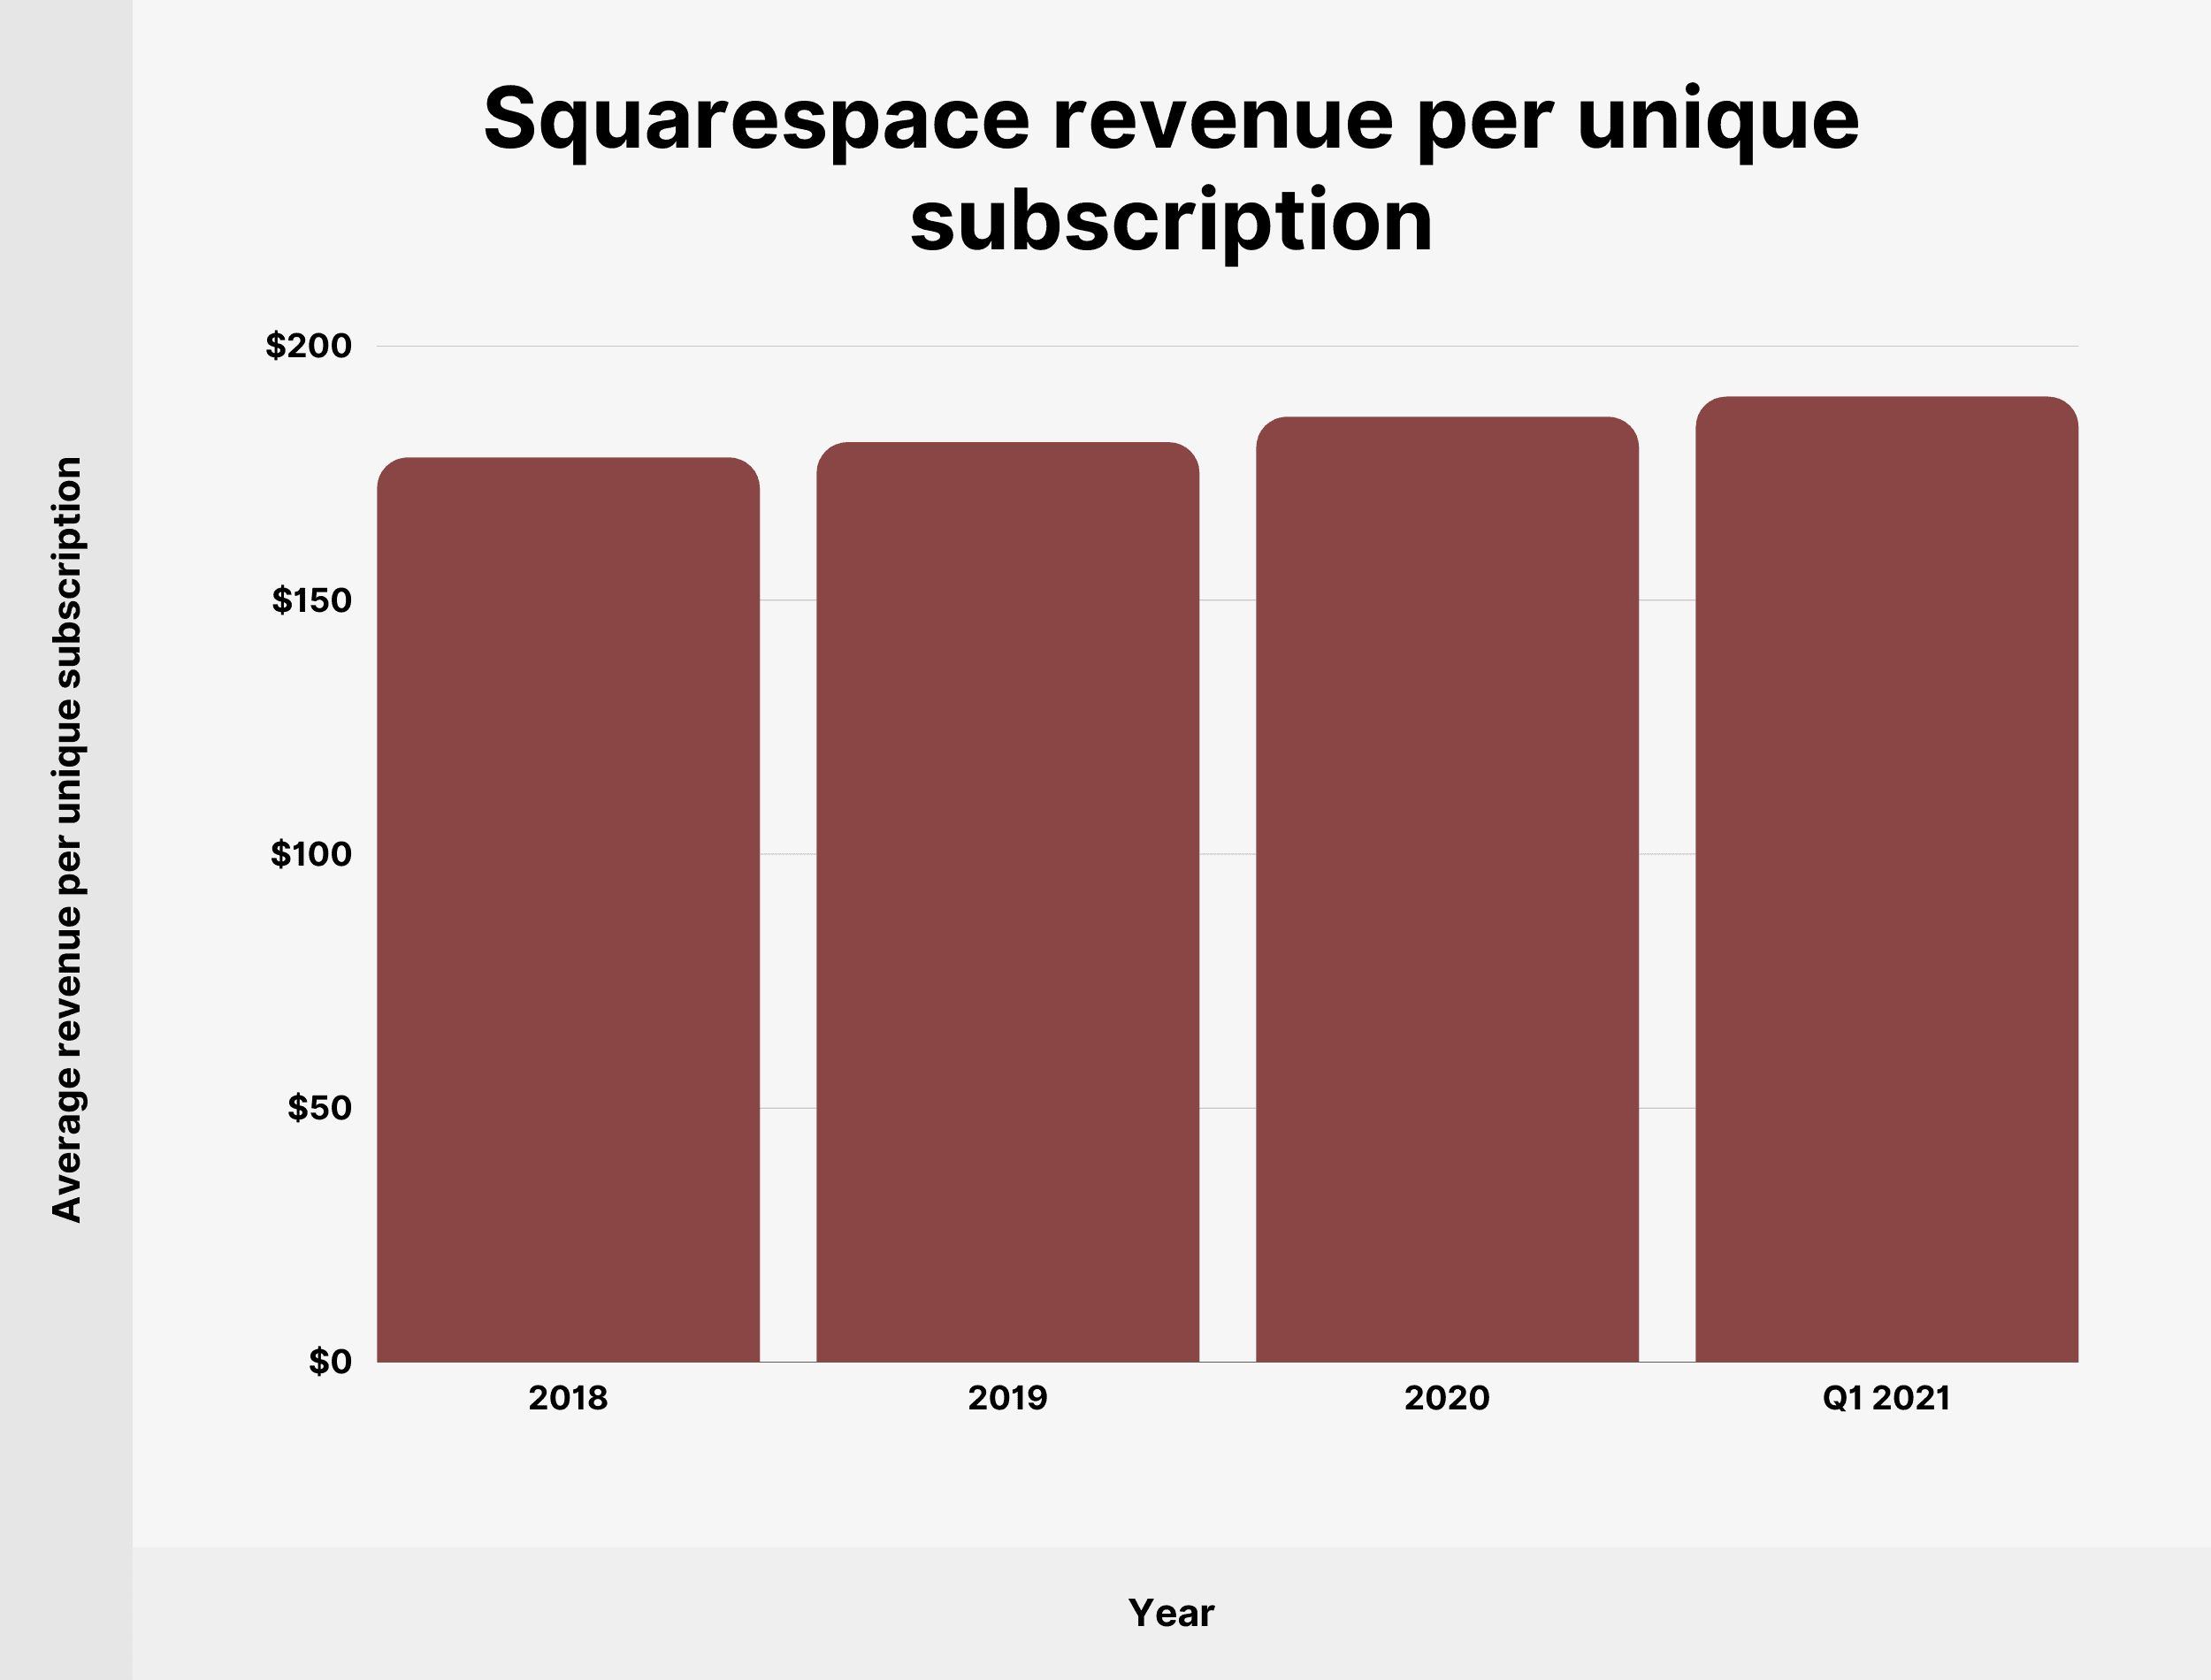 Squarespace revenue per unique subscription